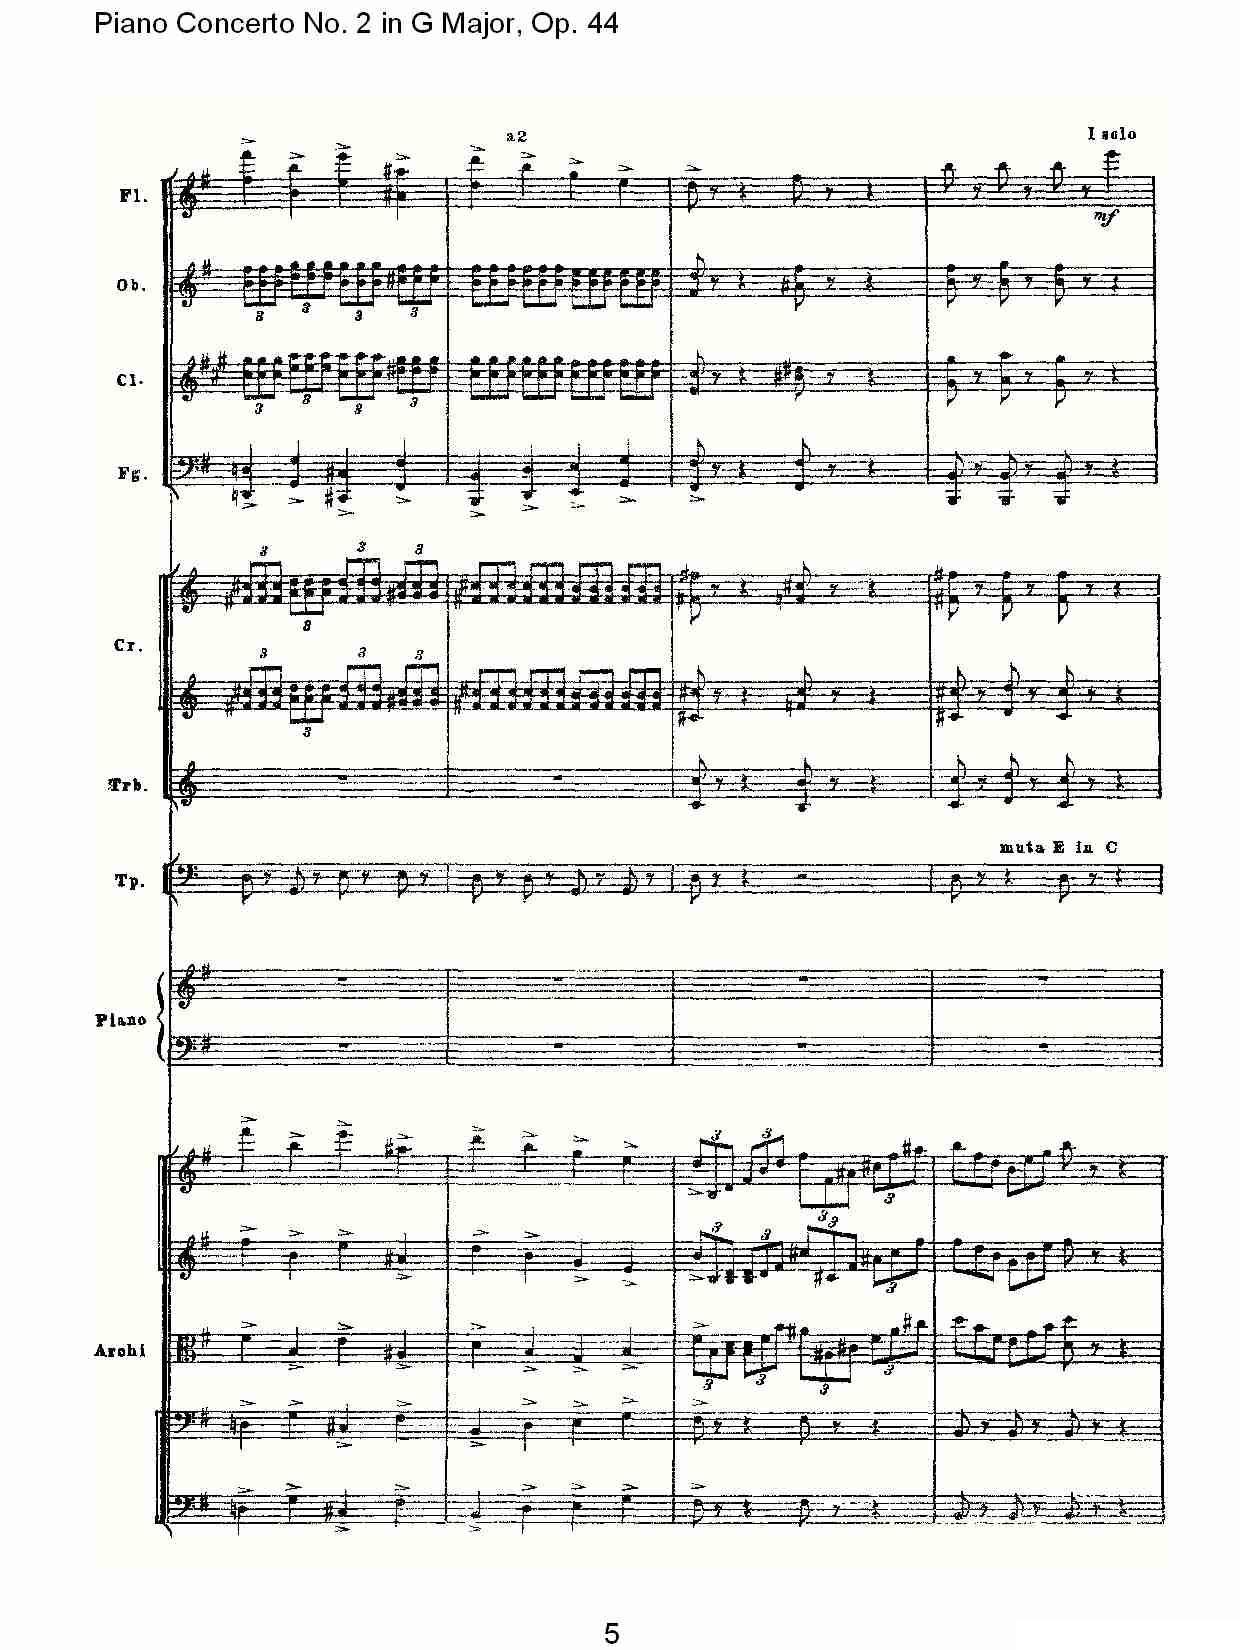 G大调第二钢琴协奏曲, Op.44第一乐章（一）钢琴曲谱（图5）